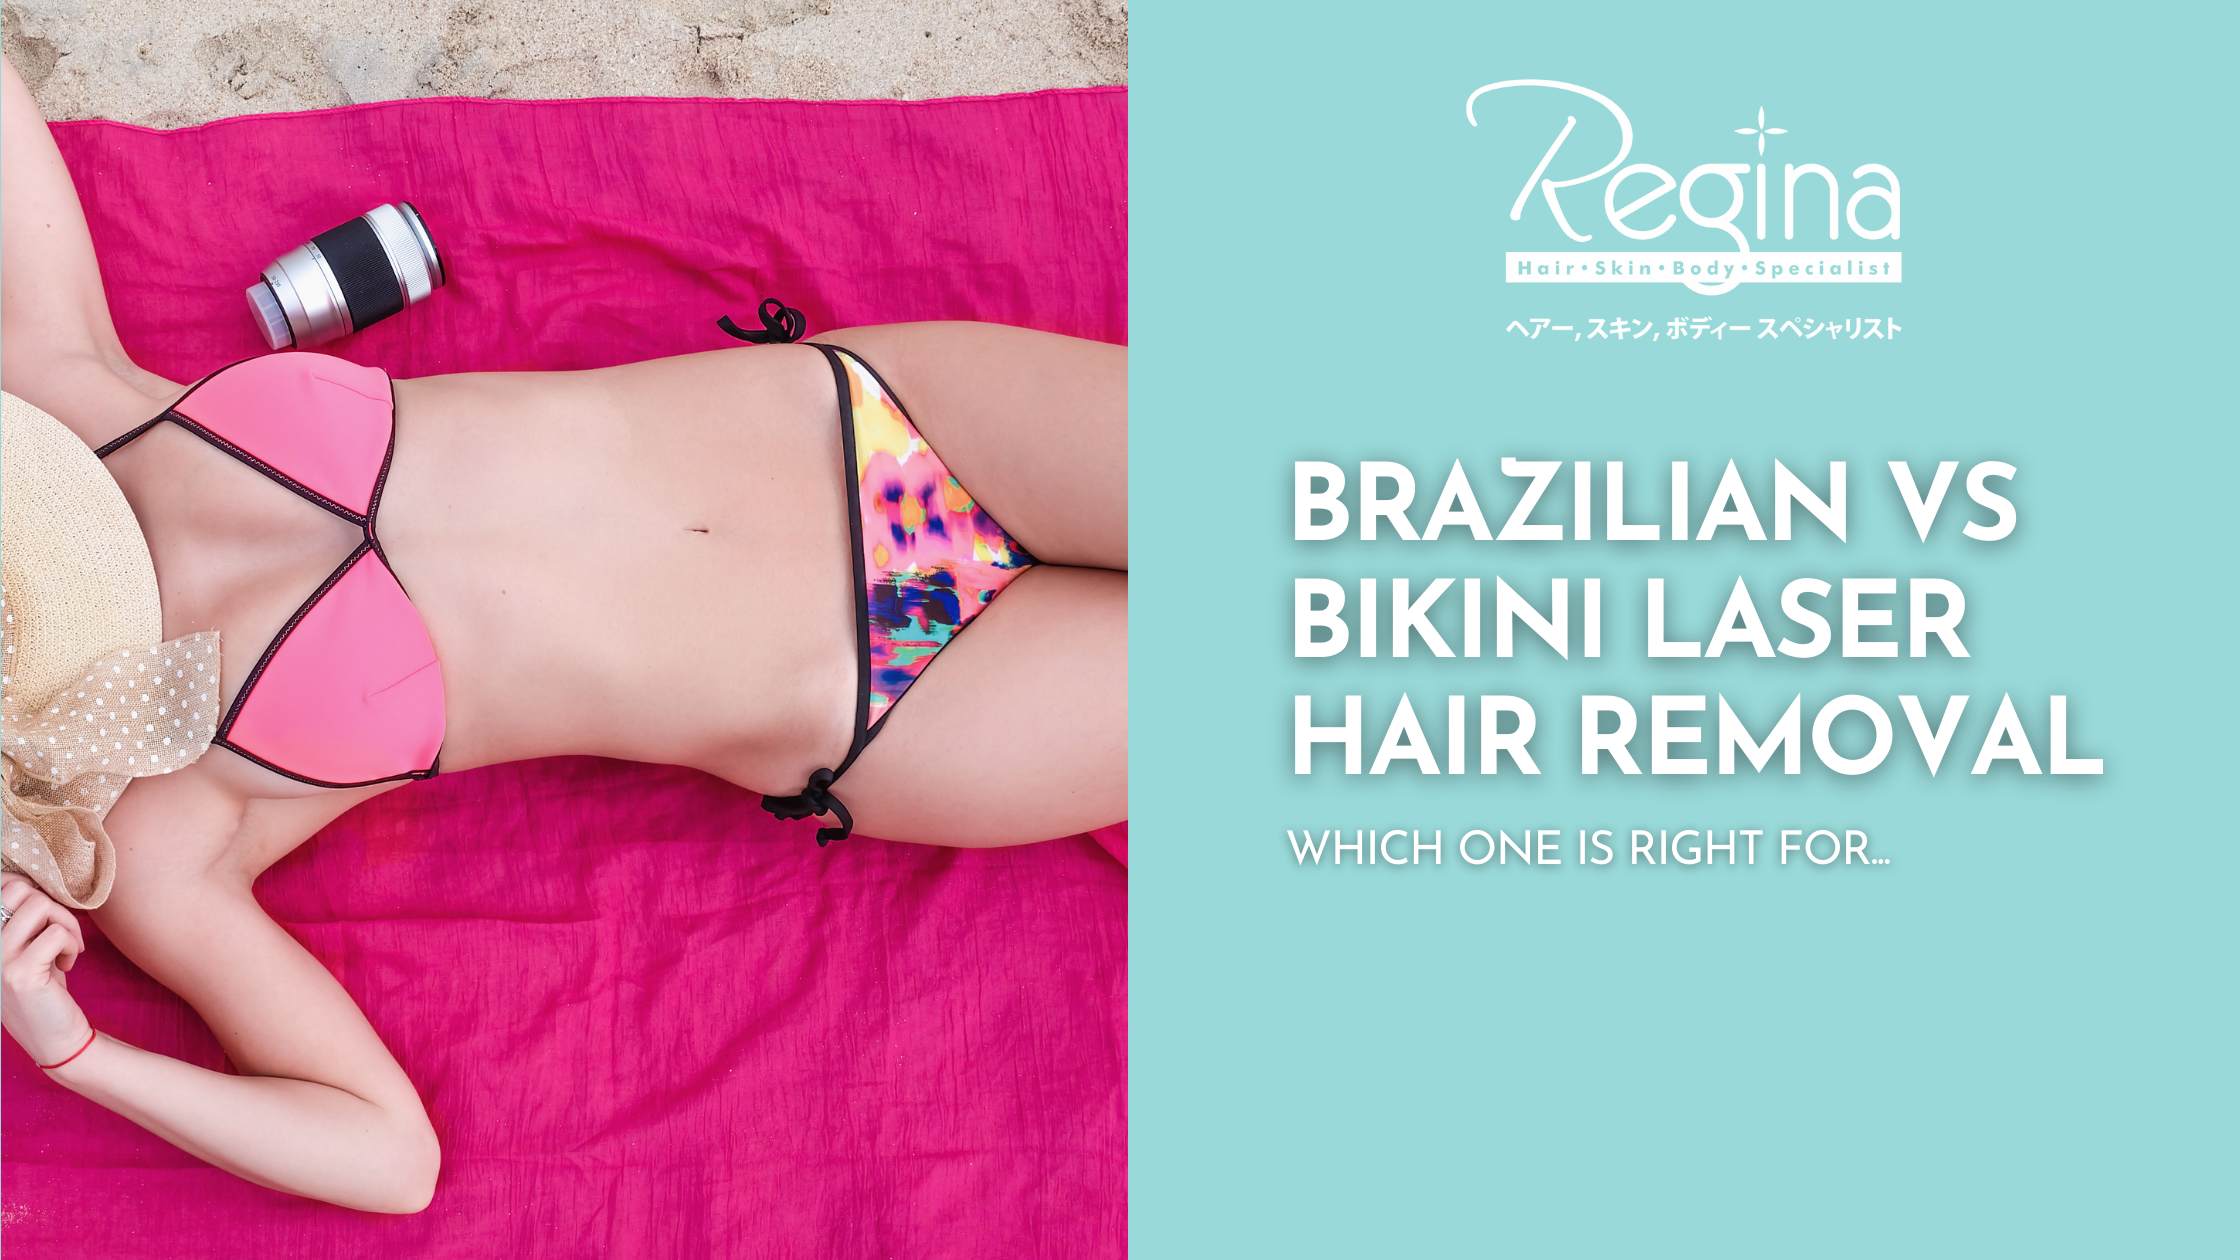 Regina Hair Removal Specialist » Regina is a hair removal salon in